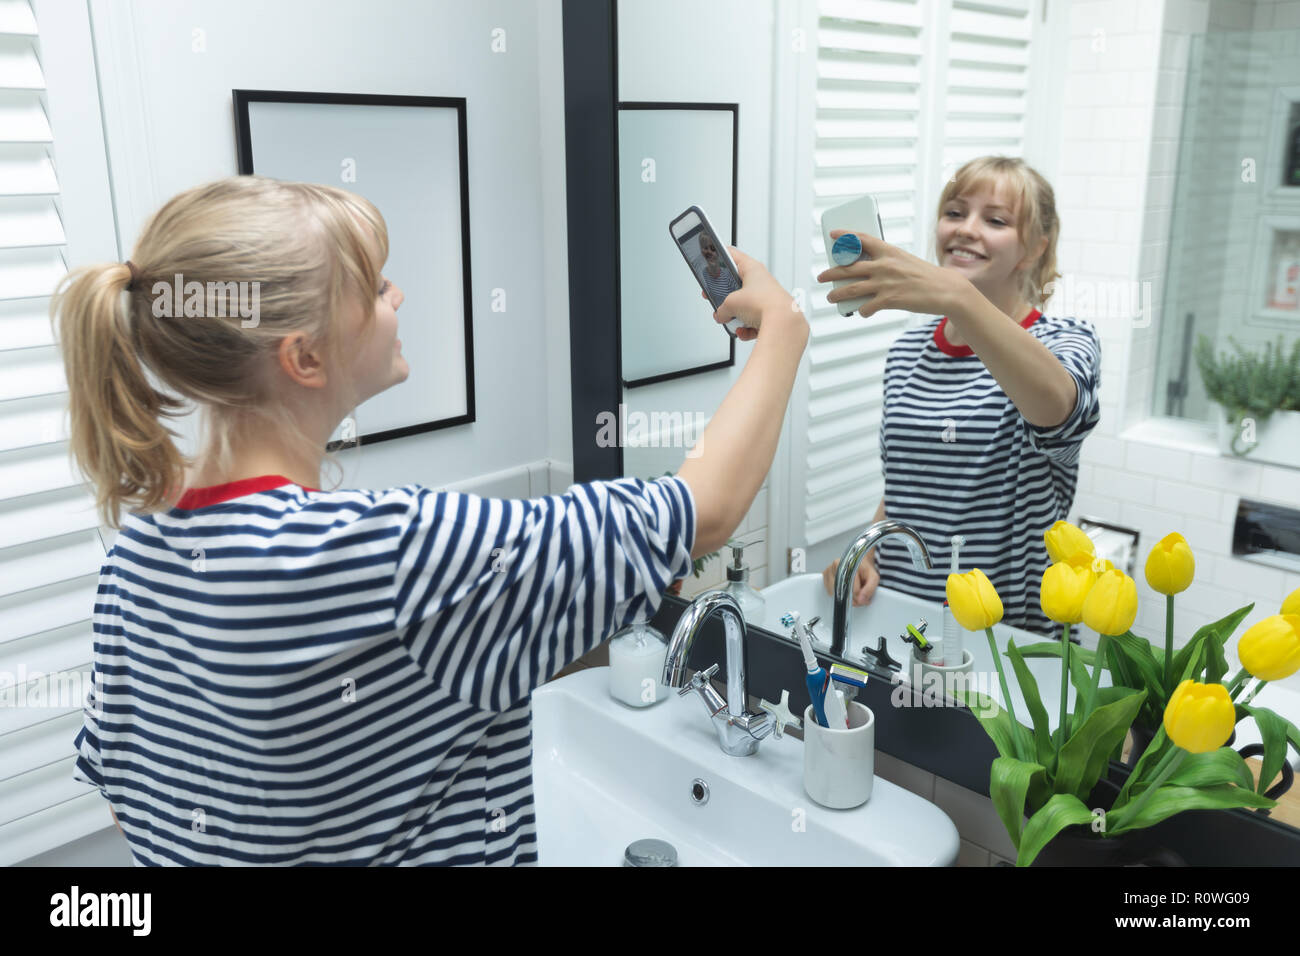 Woman taking selfie on mobile phone in bathroom Stock Photo